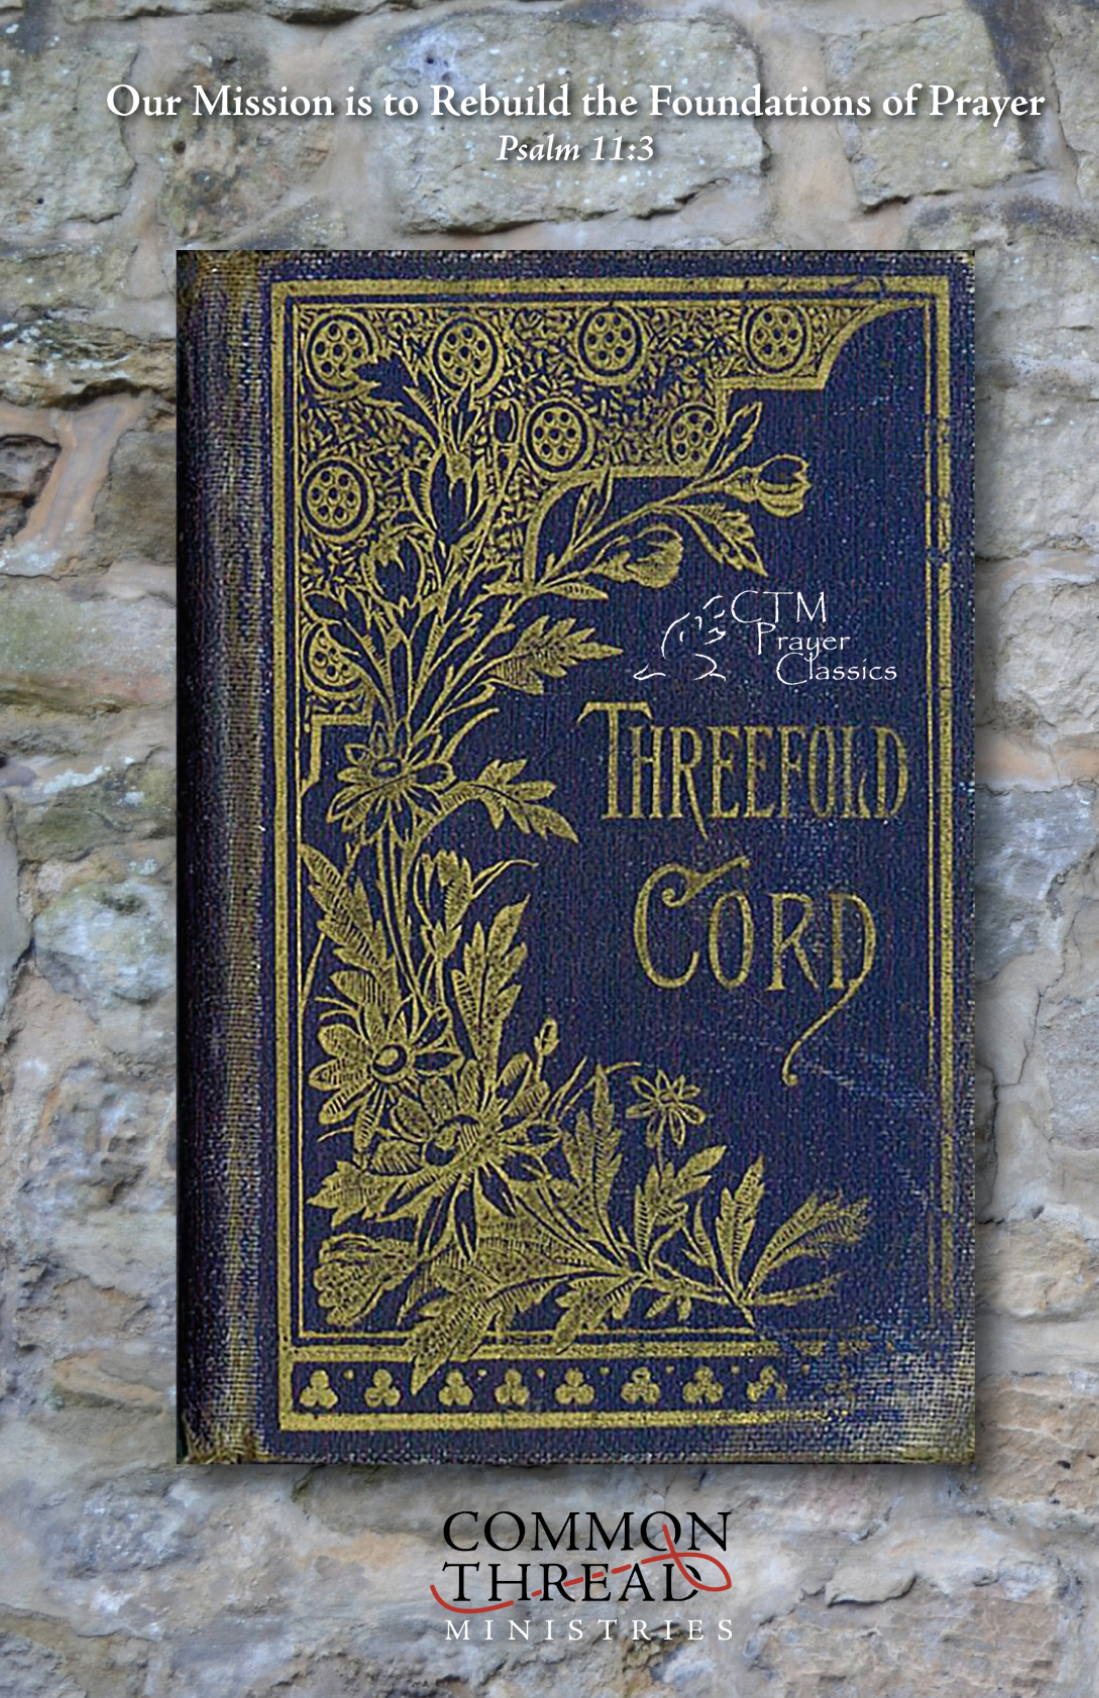 The Threefold Cord - A CTM Prayer Classic Reprint